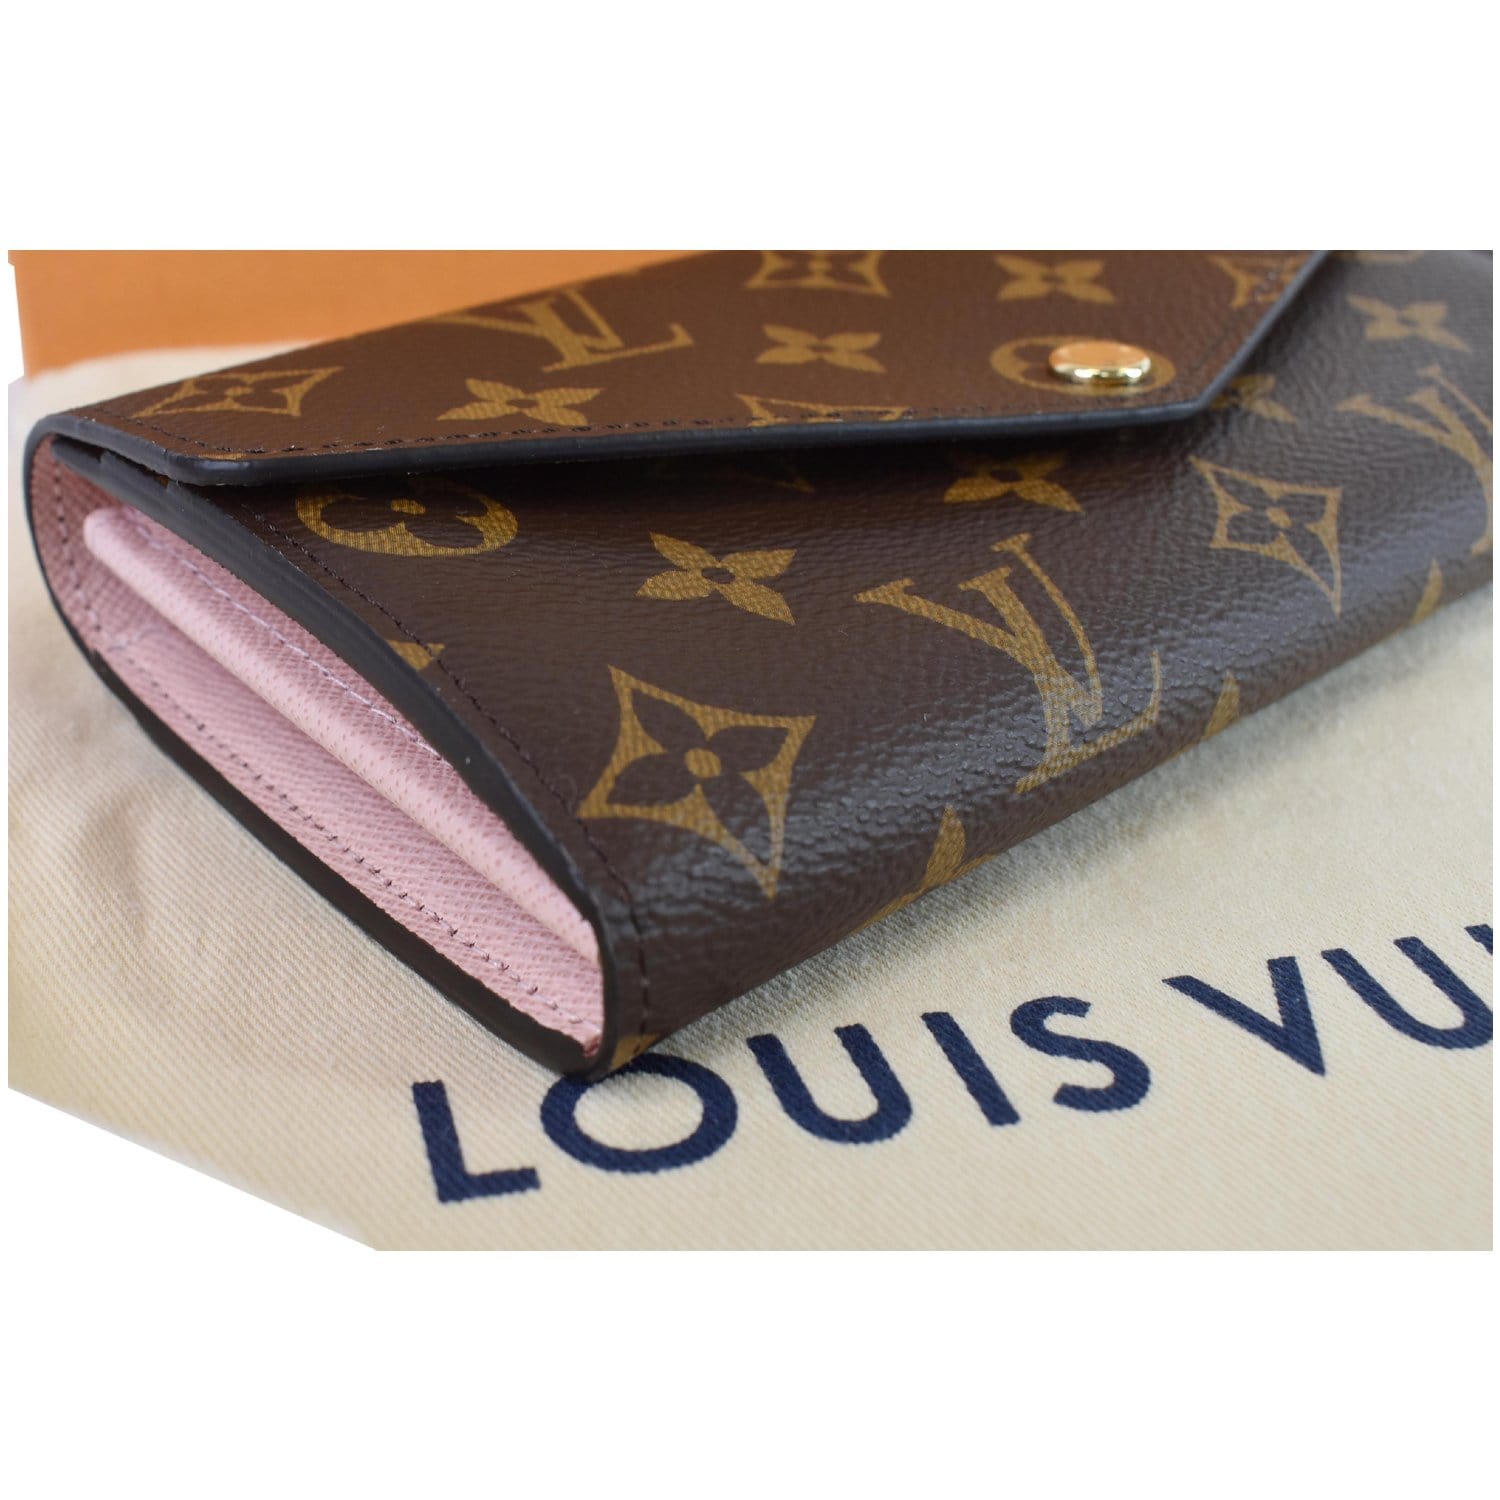 Louis Vuitton - Sarah Wallet - Monogram - Rose Ballerine - Women - Luxury